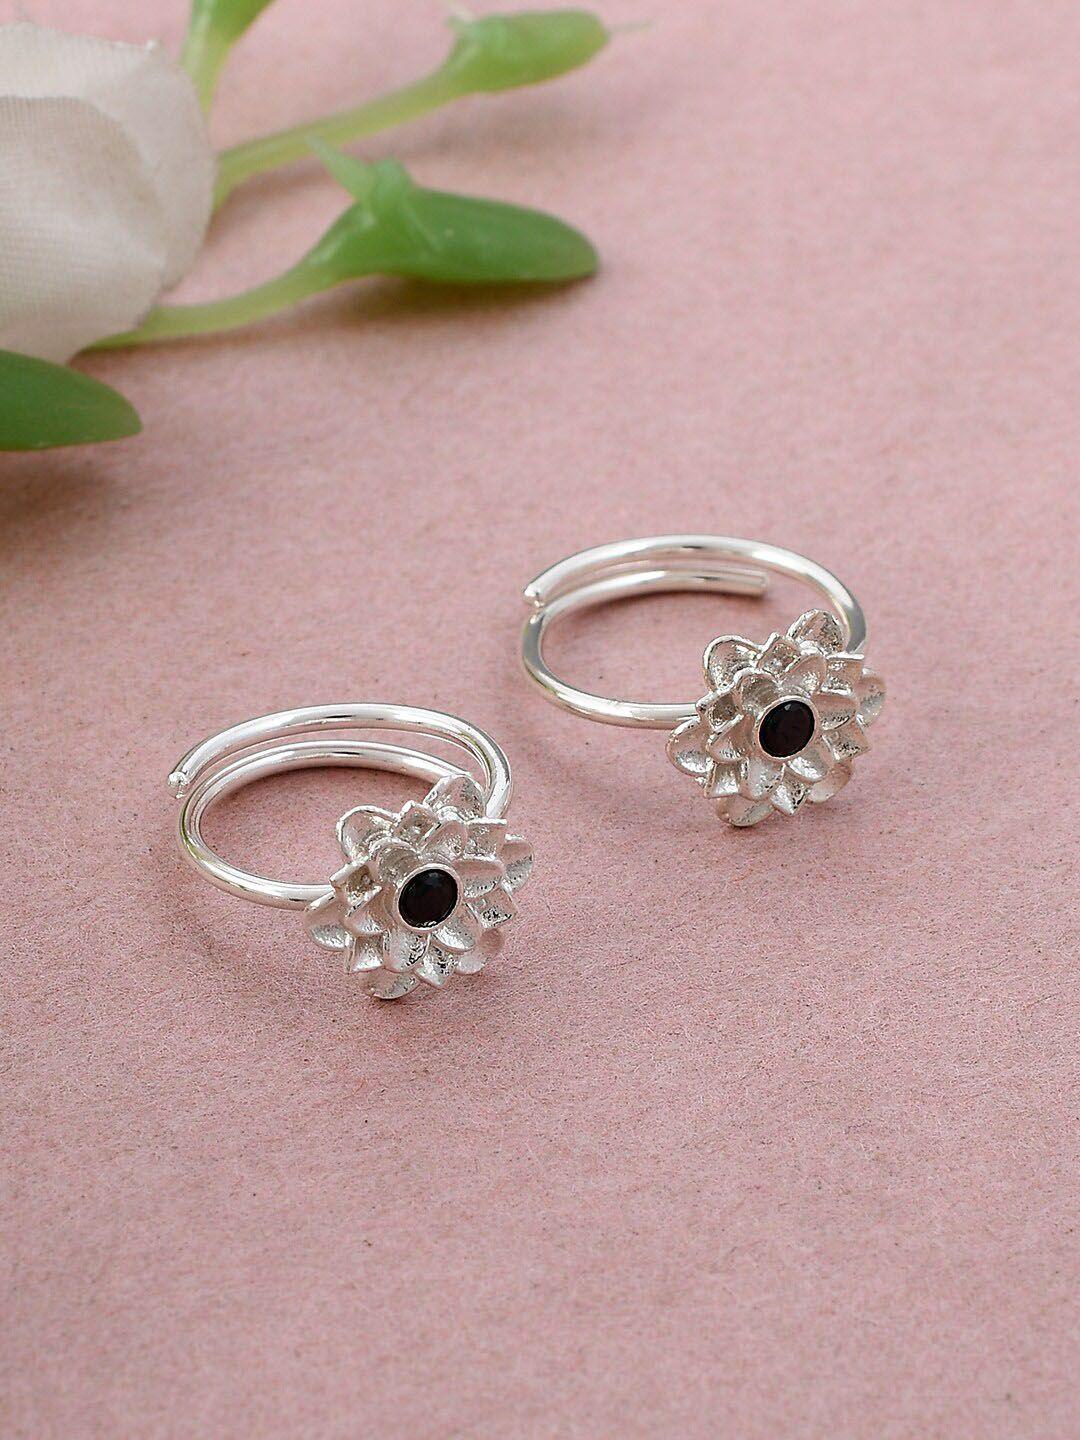 silvermerc-designs-set-of-2-silver-plated-&-black-quartz-studded-adjustable-toe-rings